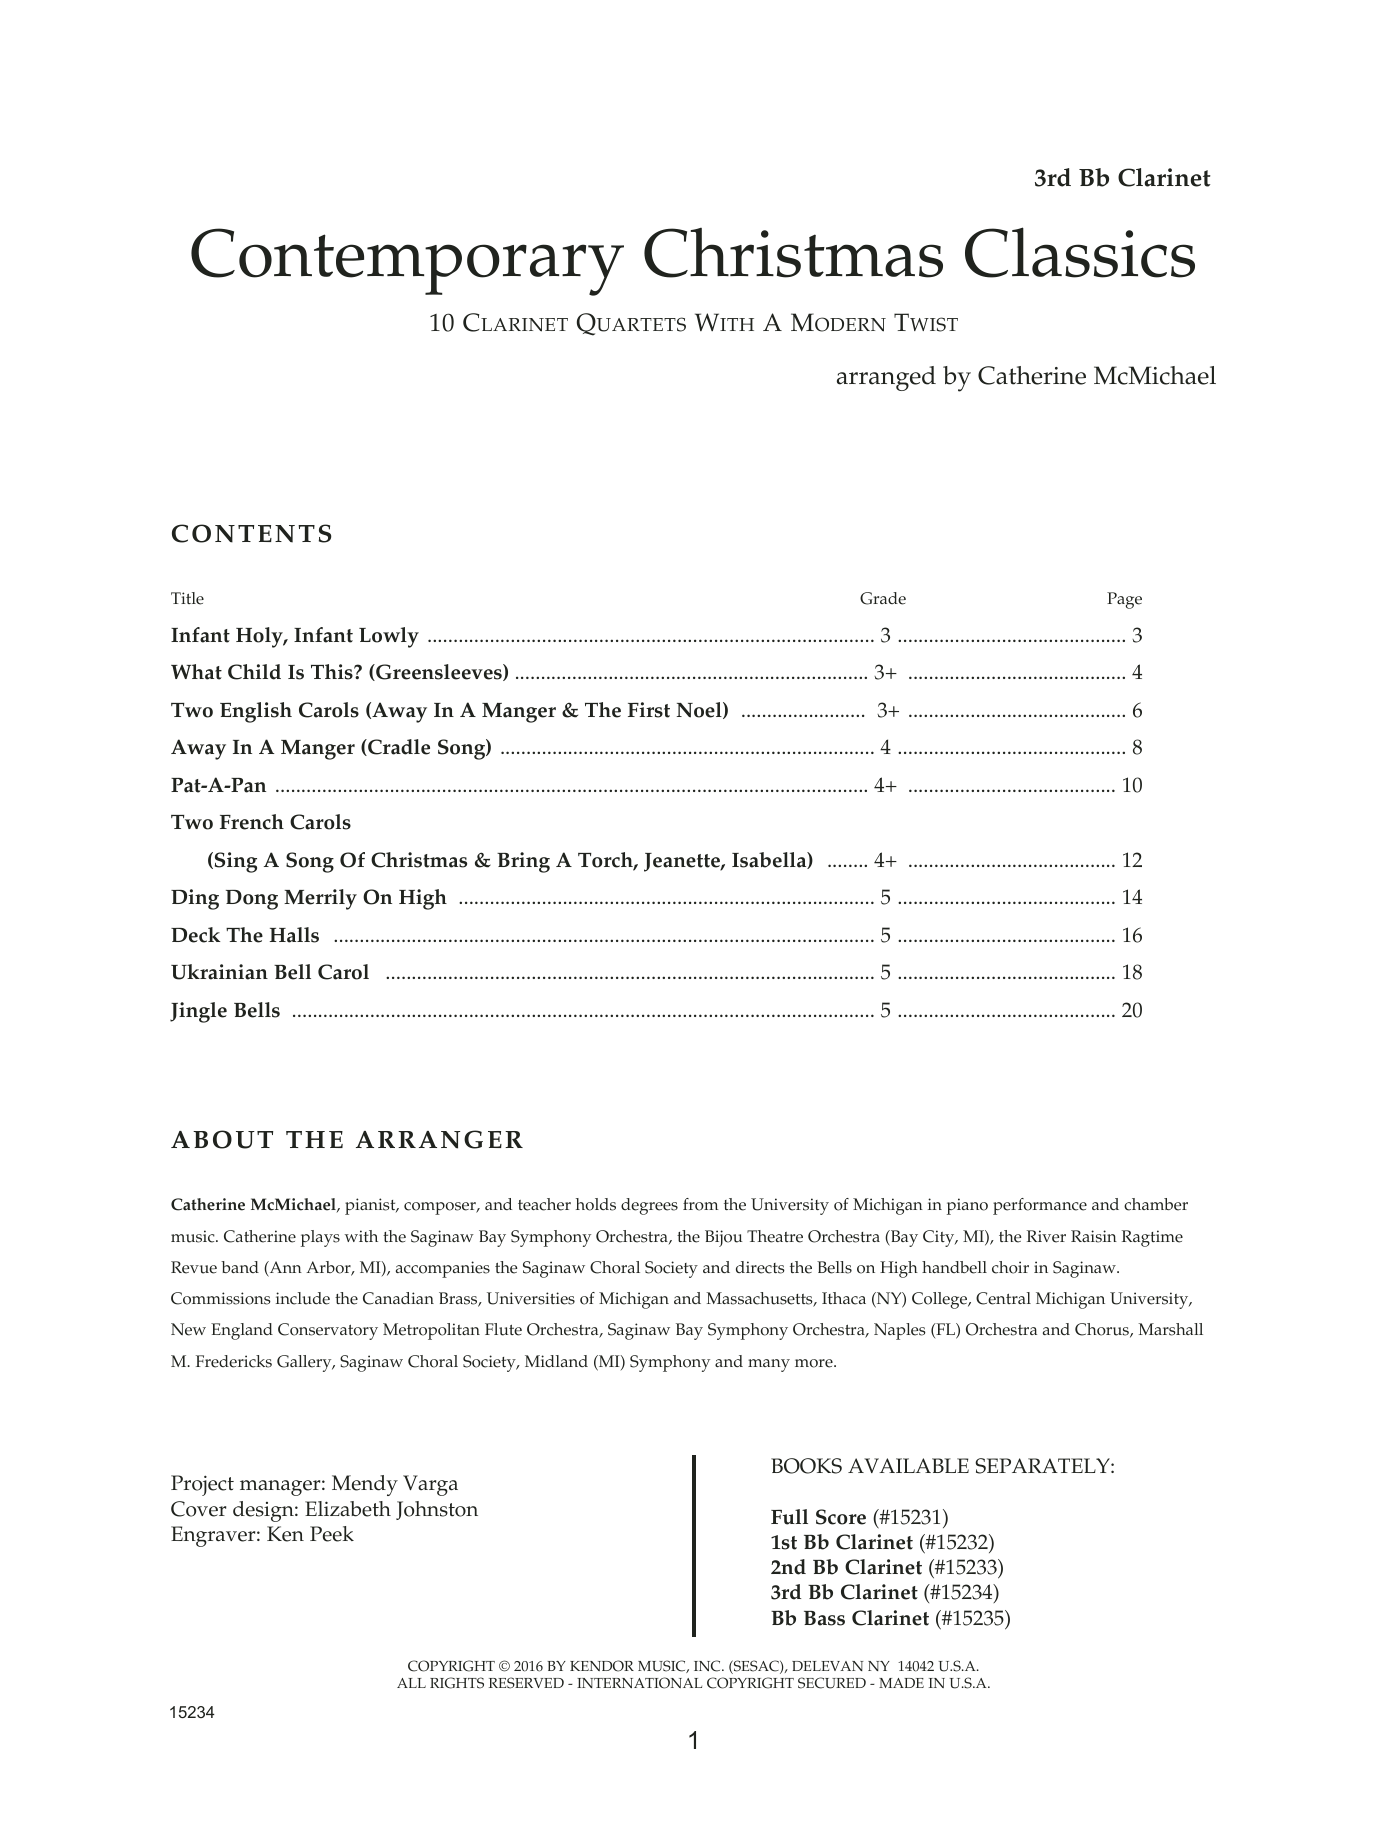 Contemporary Christmas Classics - 3rd Bb Clarinet (Woodwind Ensemble) von Catherine McMichael